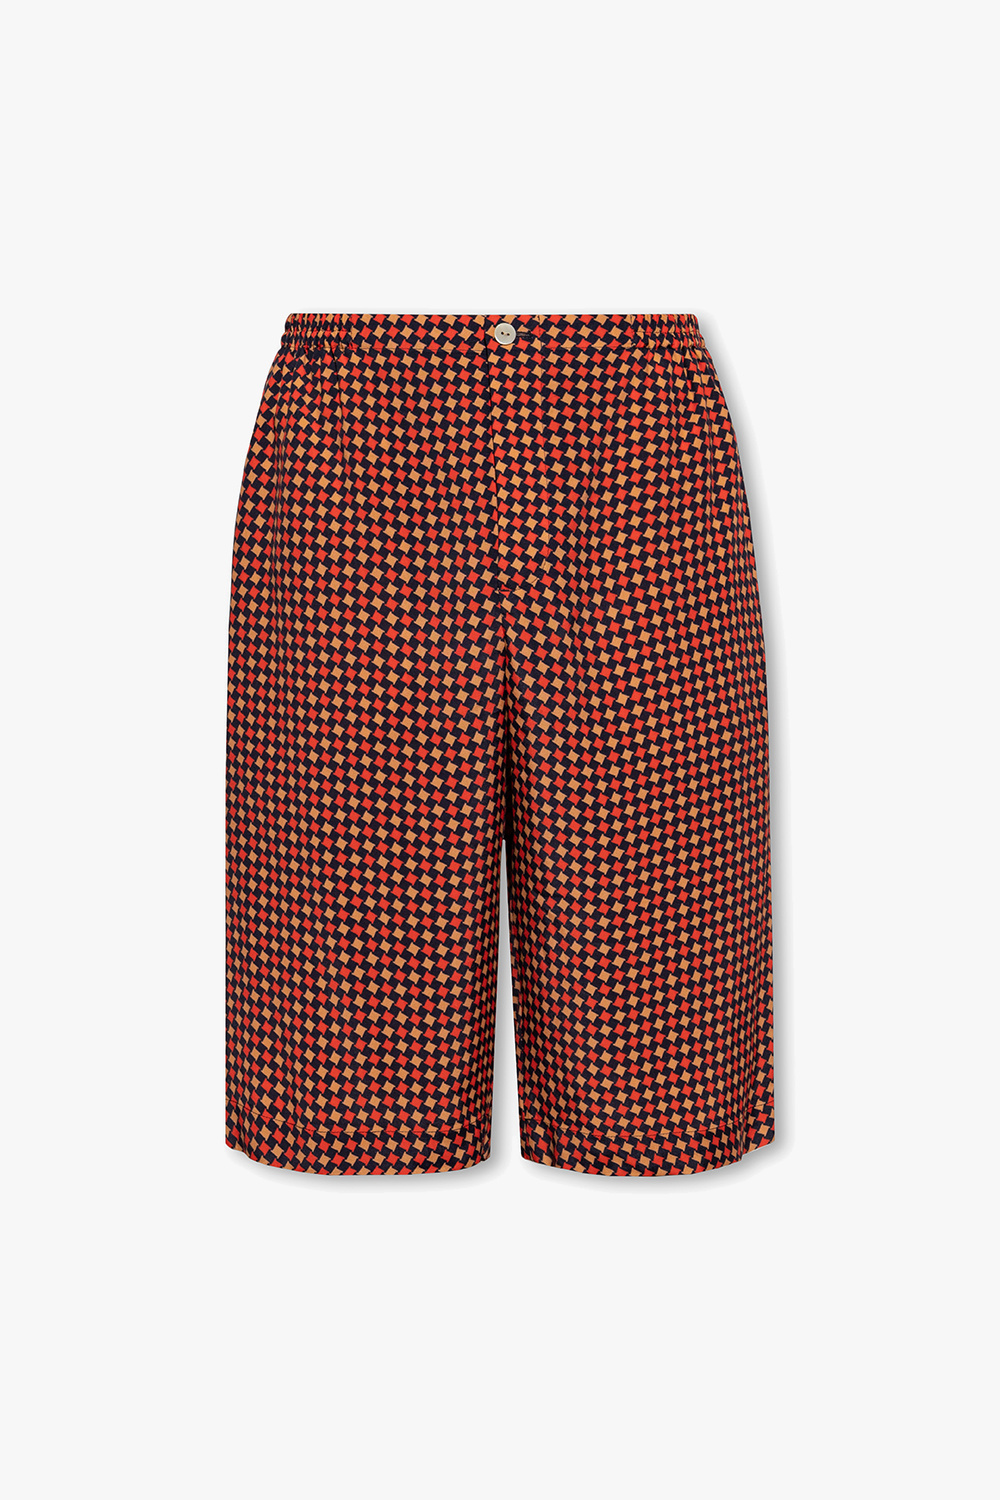 Gucci Shorts with geometric pattern